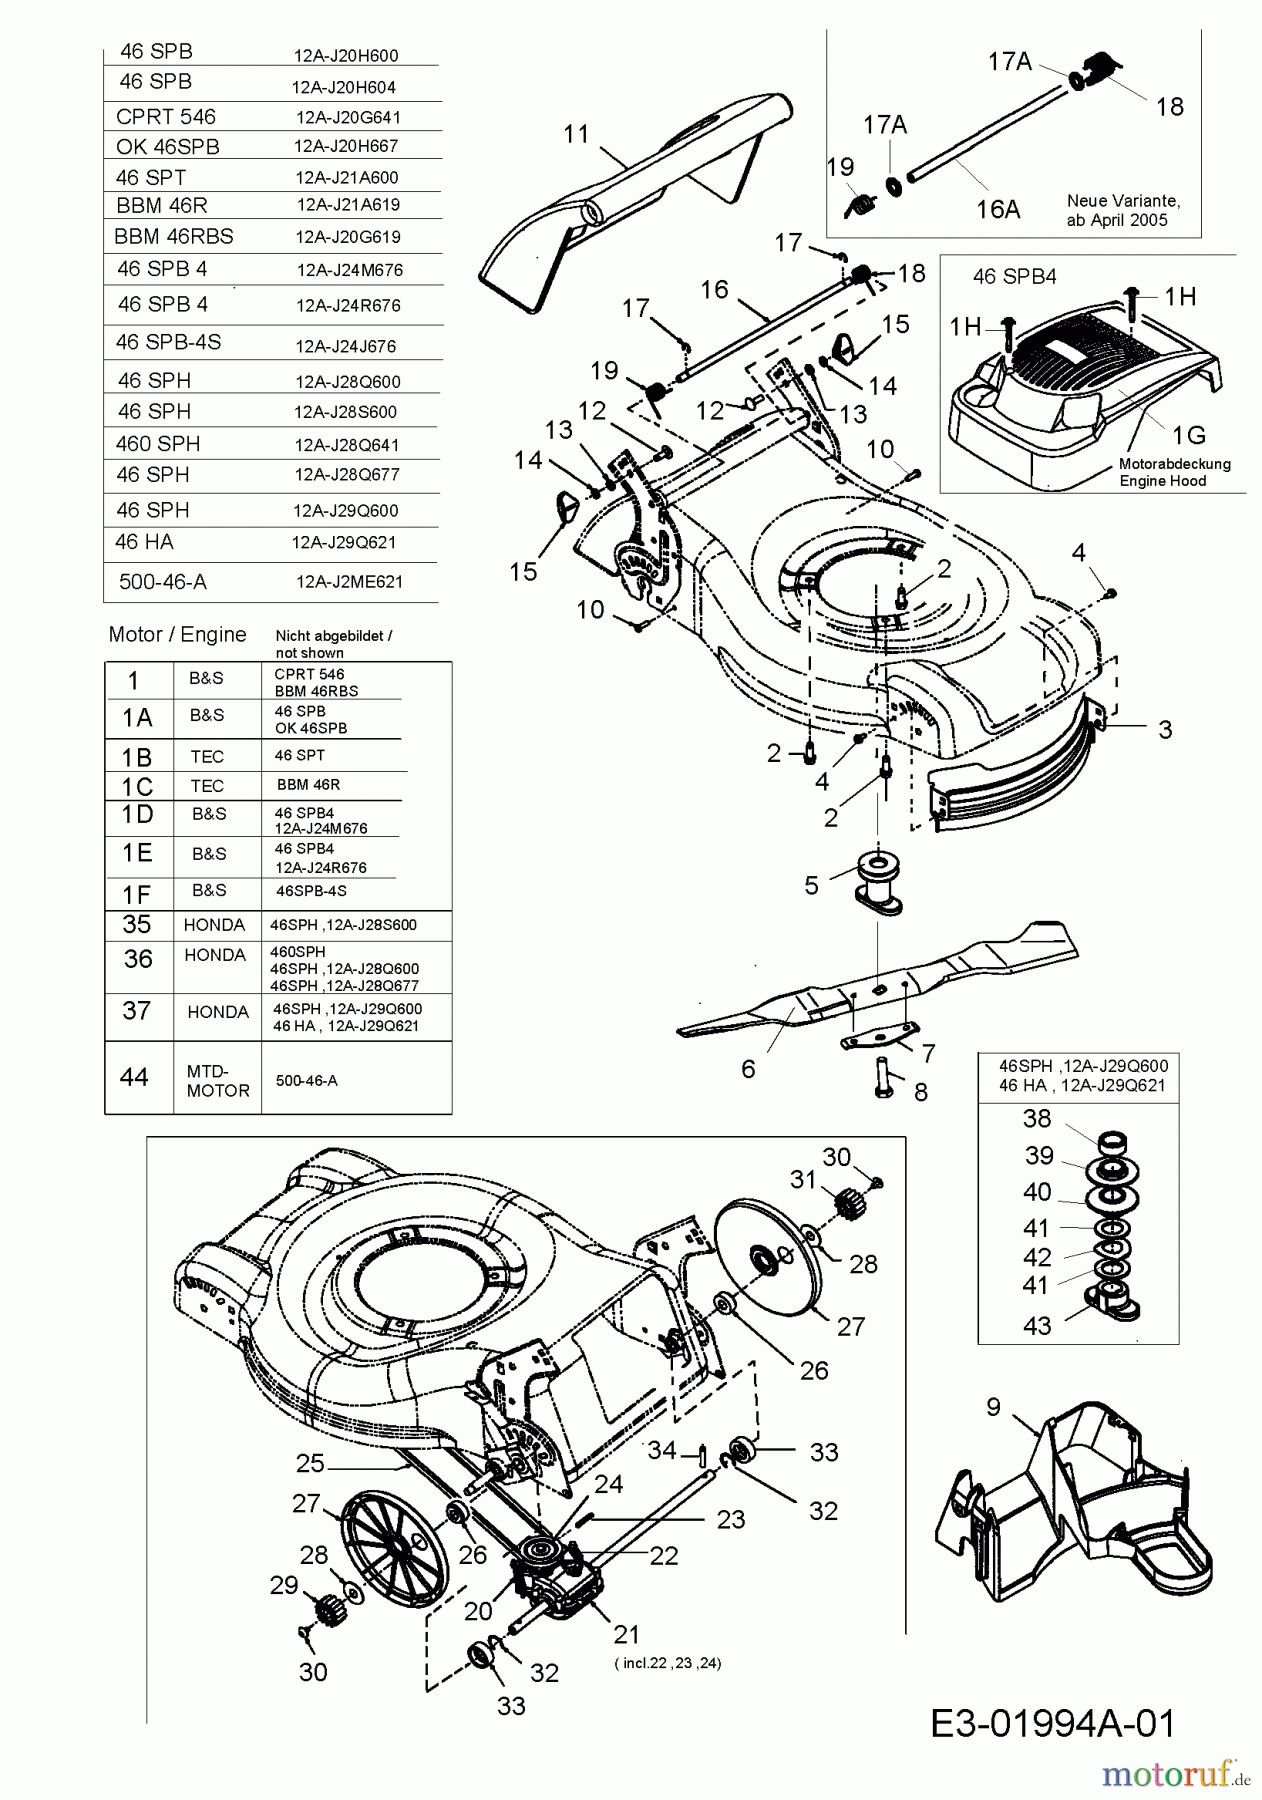  MTD Motormäher mit Antrieb 46 SPB-4 S 12A-J24J676  (2005) Getriebe, Messer, Motor